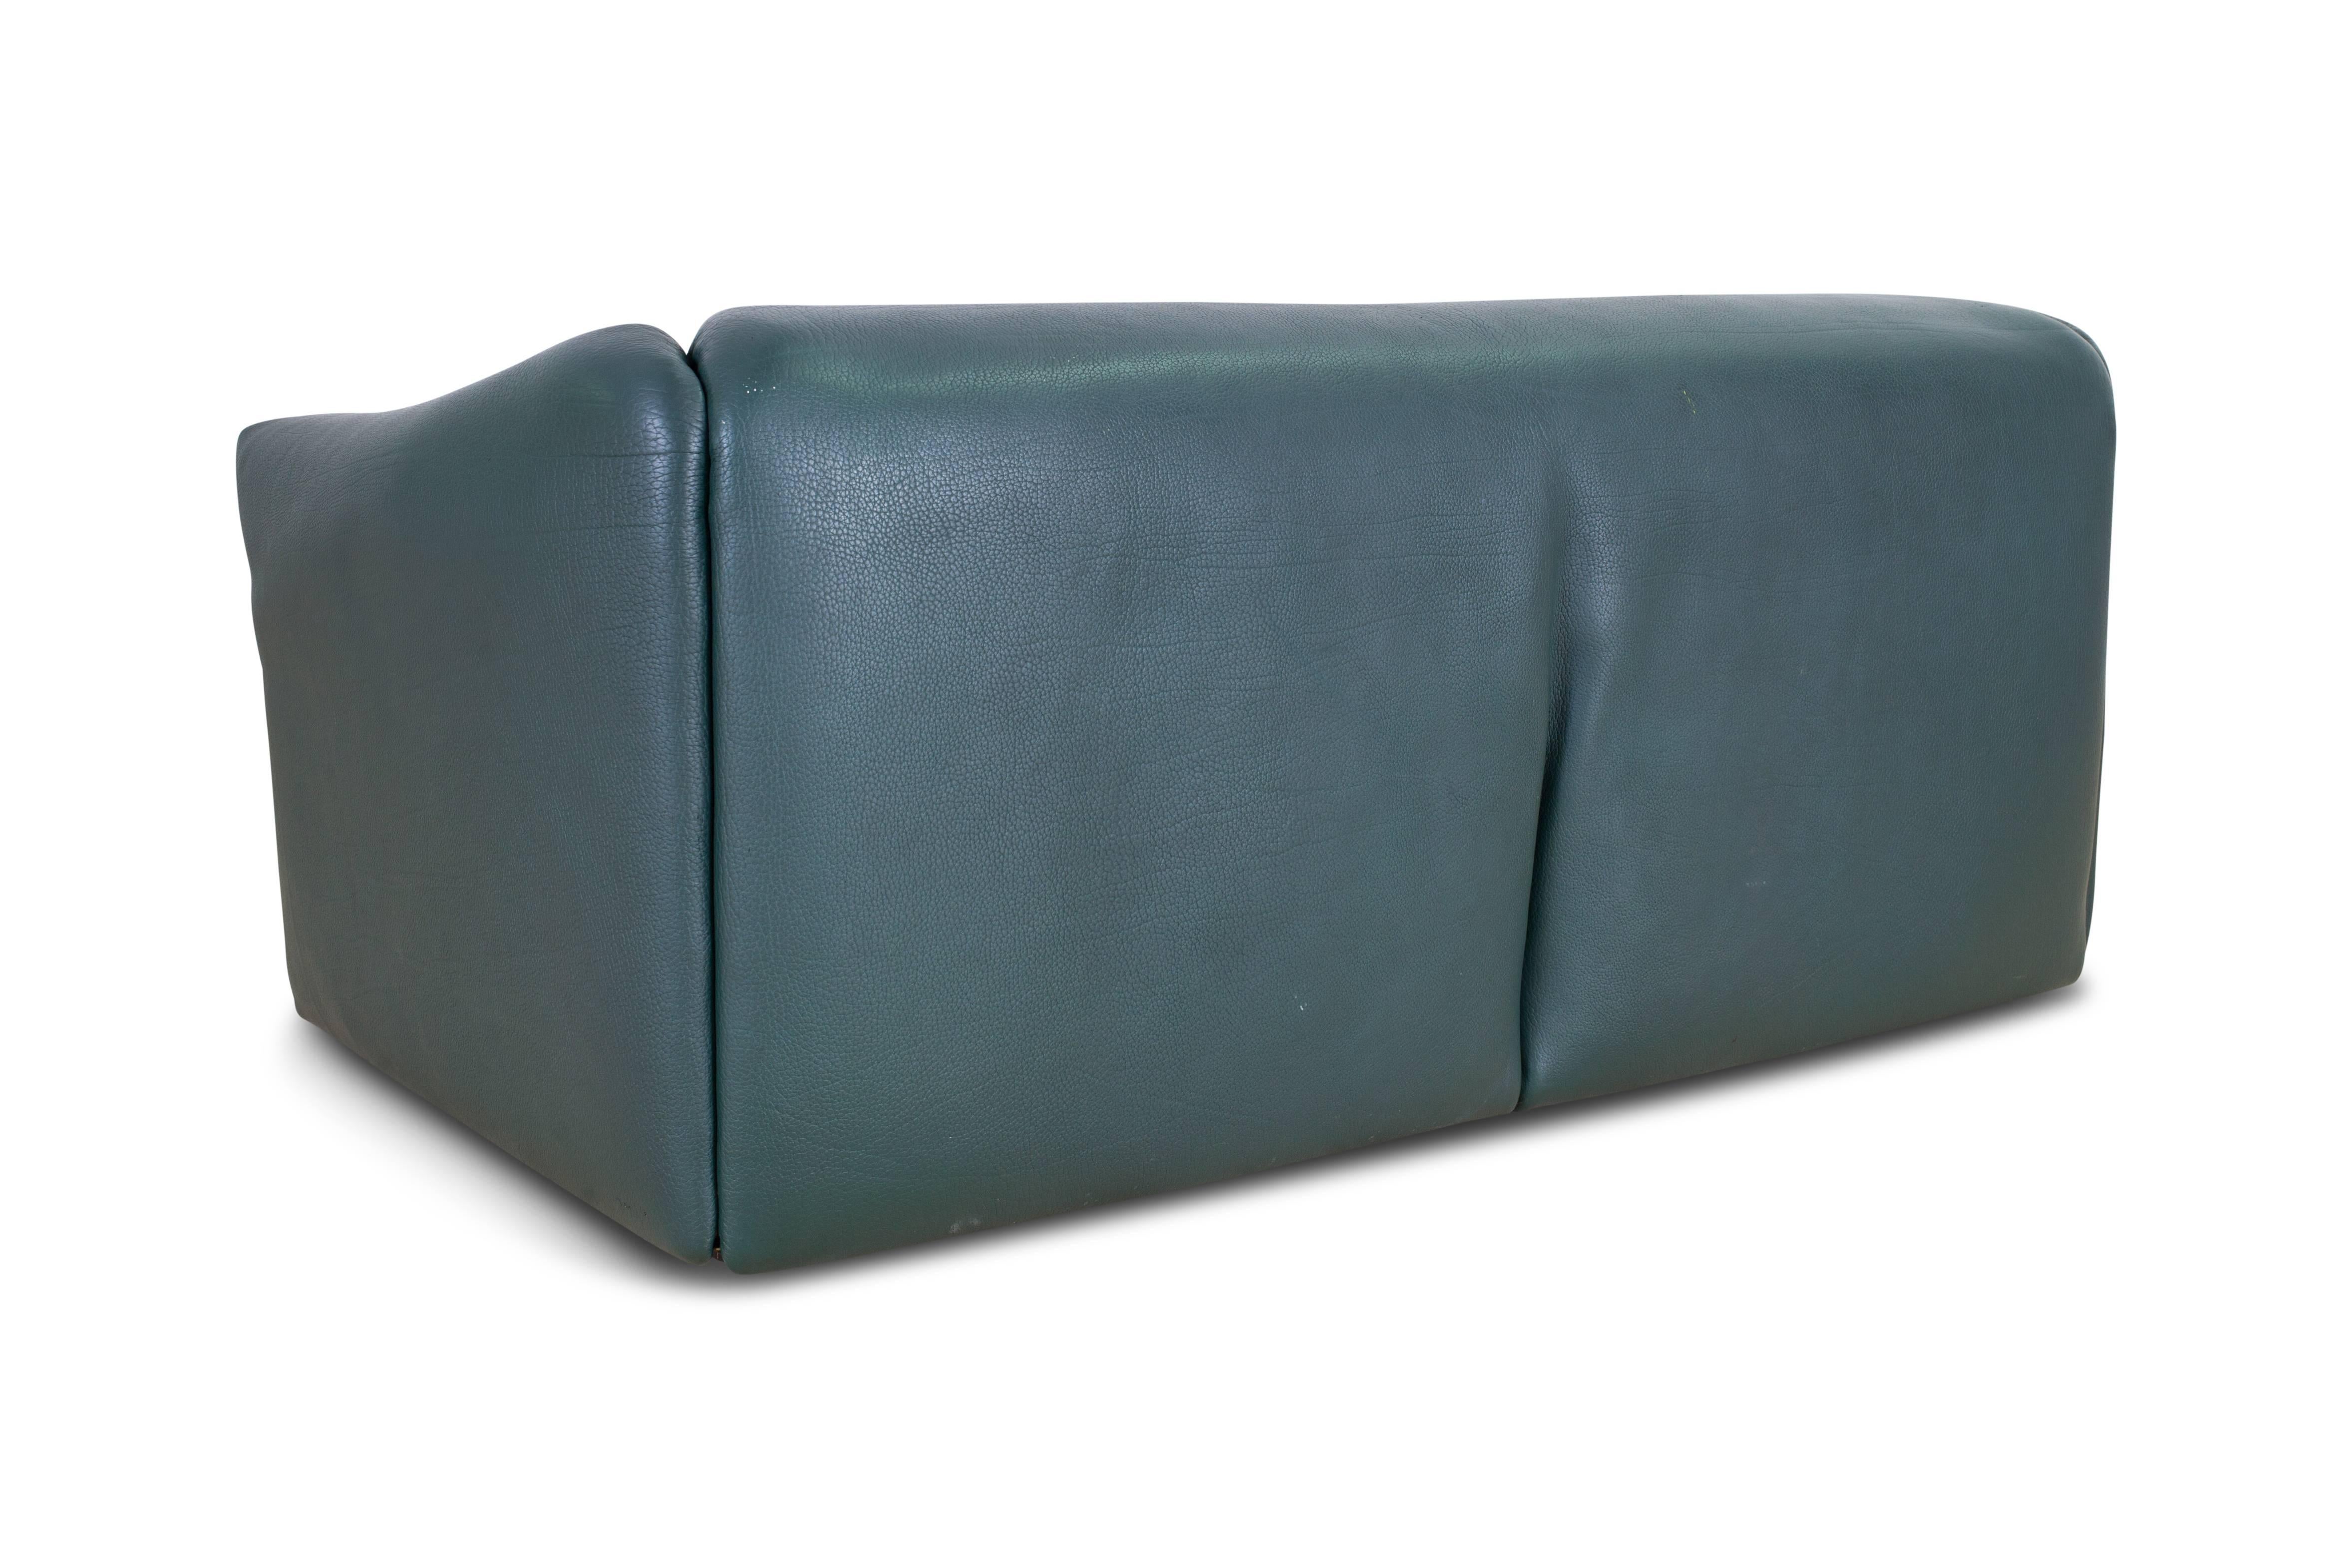 Swiss Mid-century modern De Sede DS 47 Sofa in Petrol Green Leather